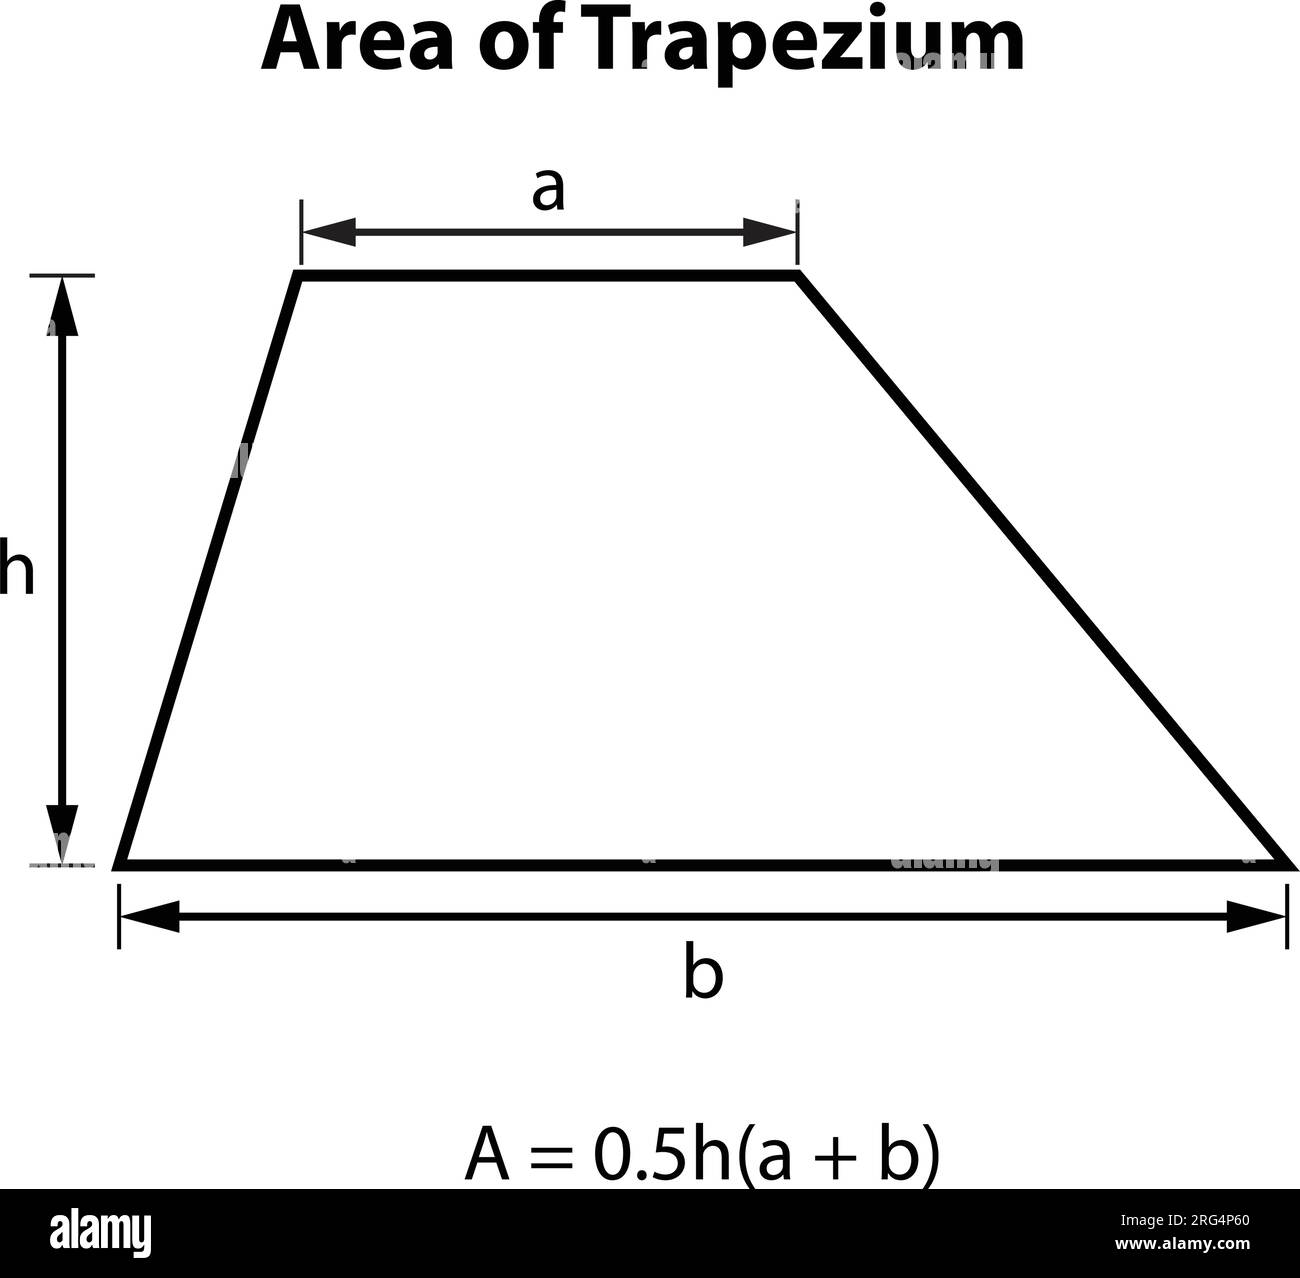 Trapezium Area Formula. Geometric shapes. isolated on white background Vector illustration. Stock Vector